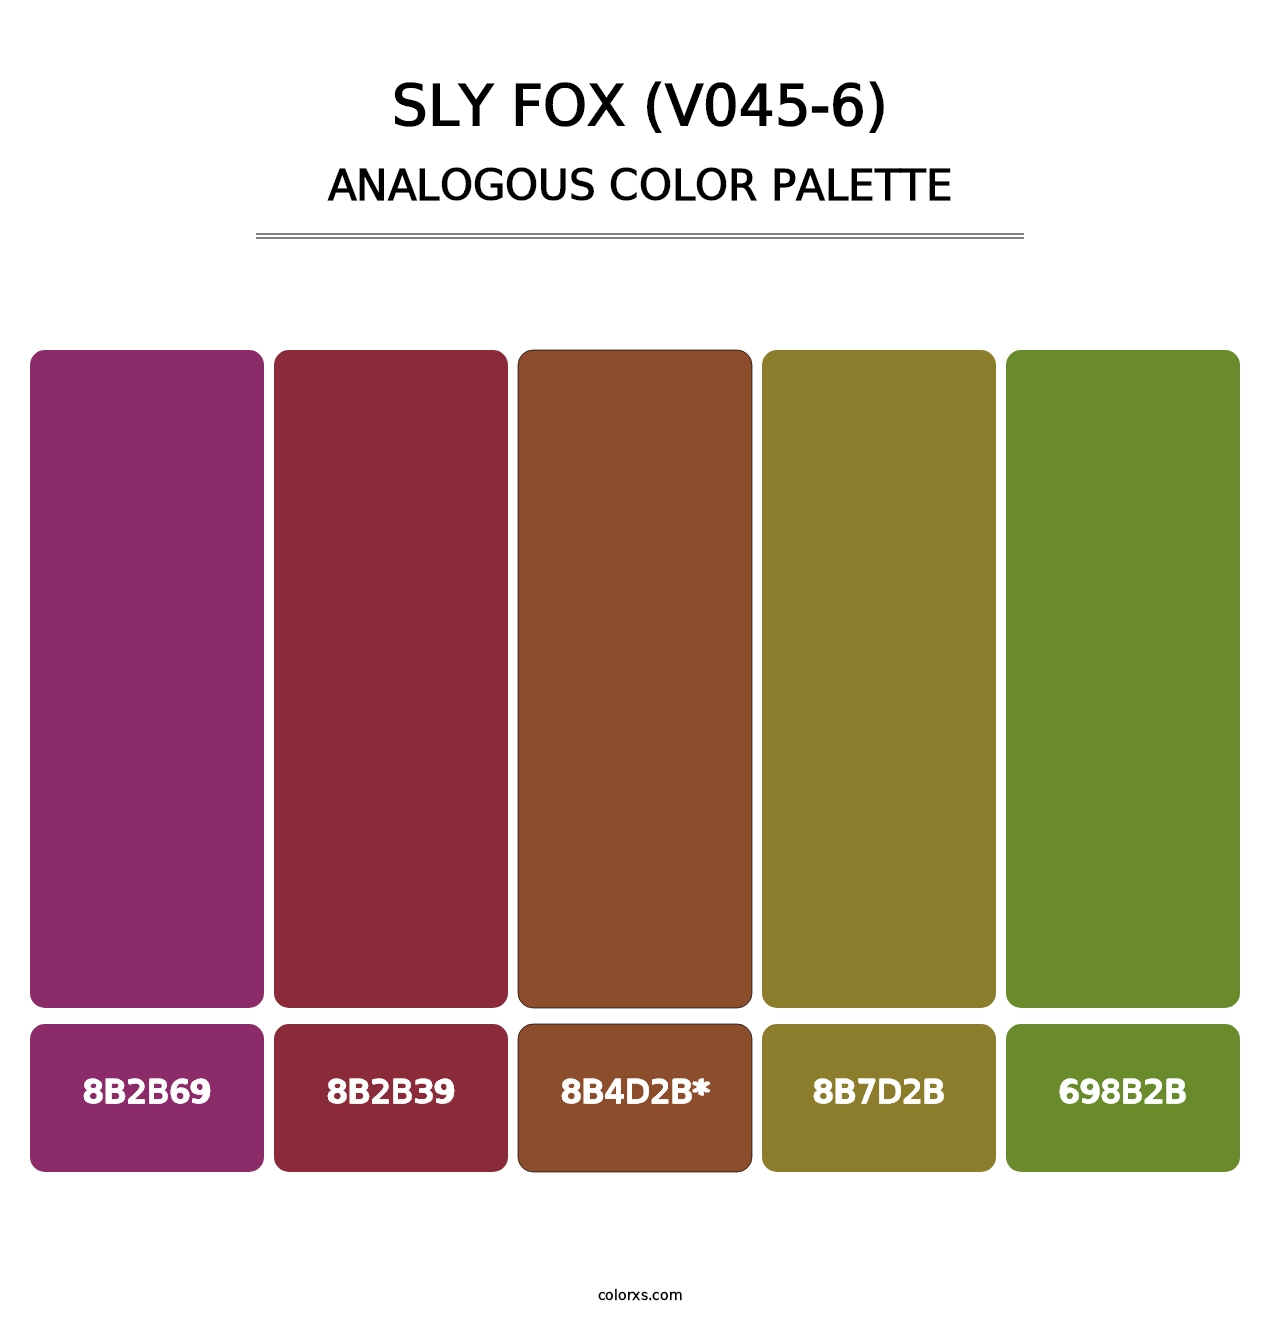 Sly Fox (V045-6) - Analogous Color Palette